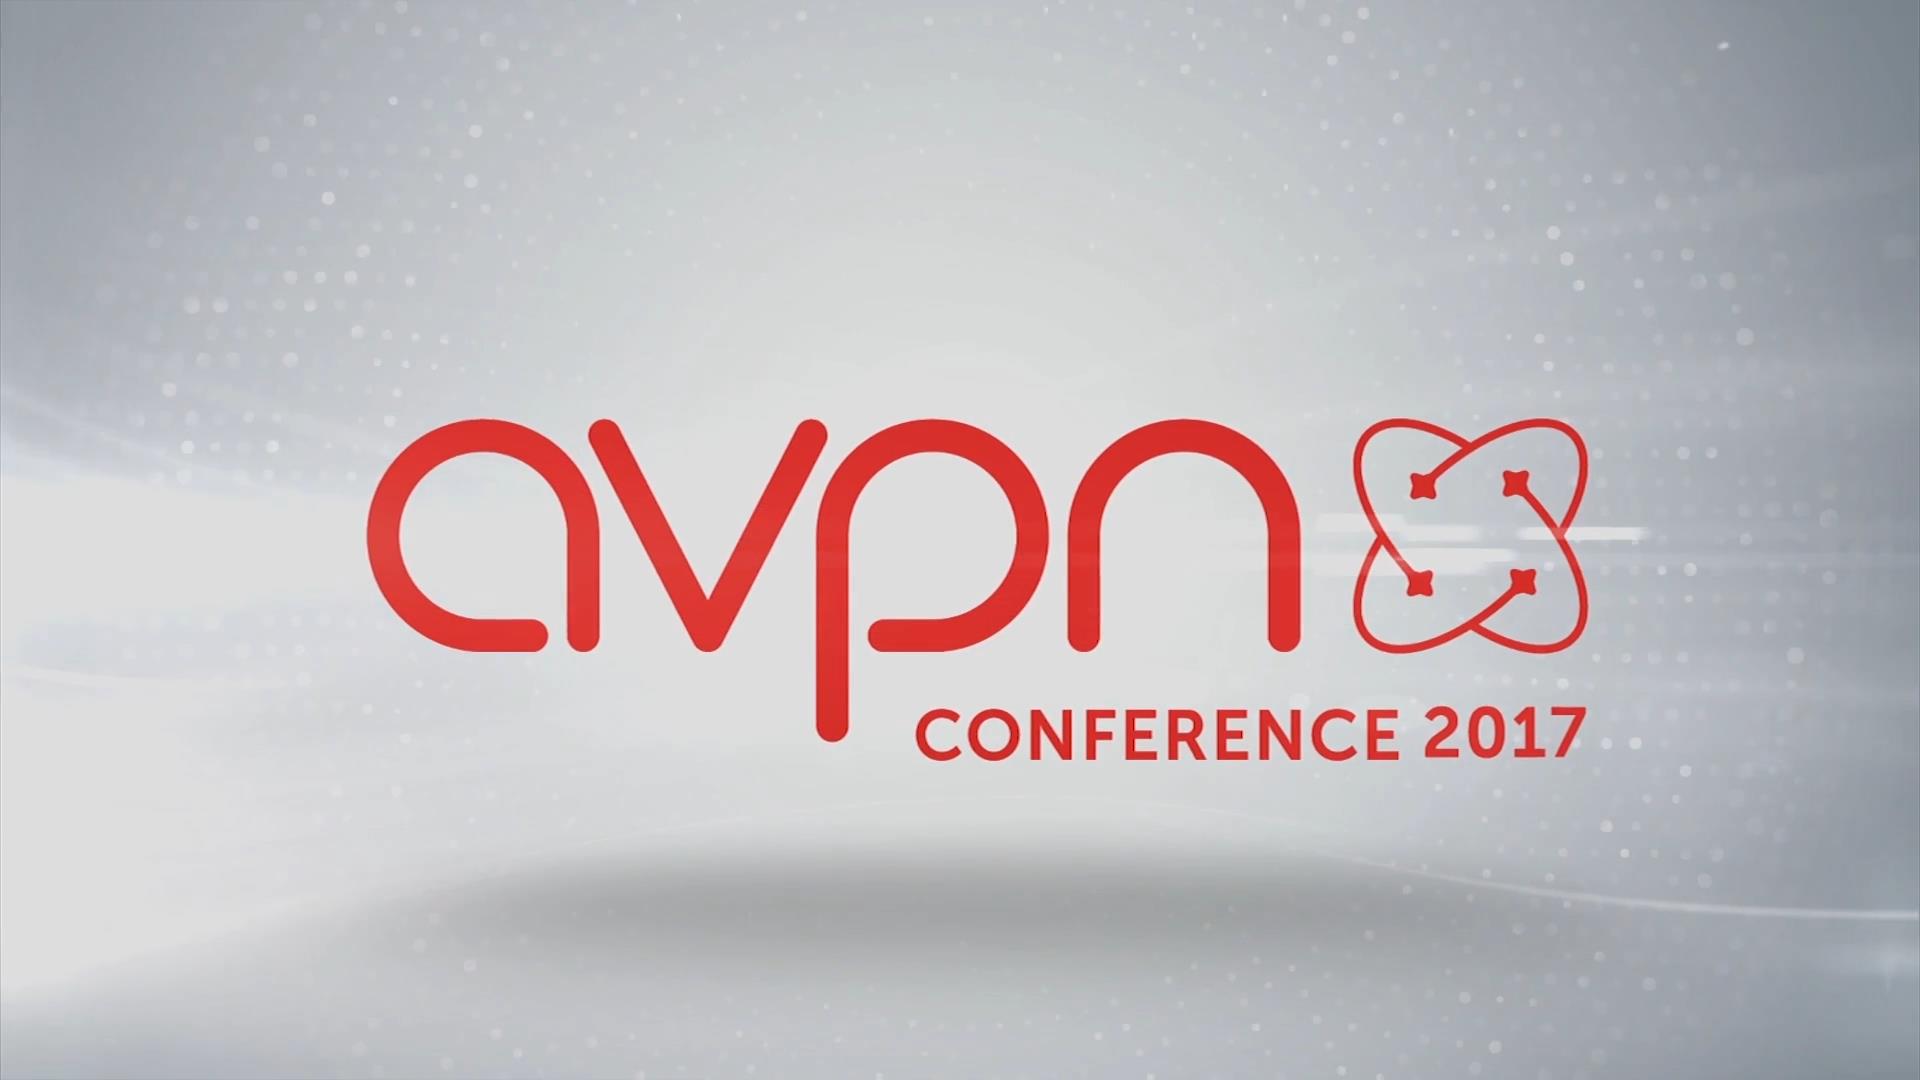 avpn conference